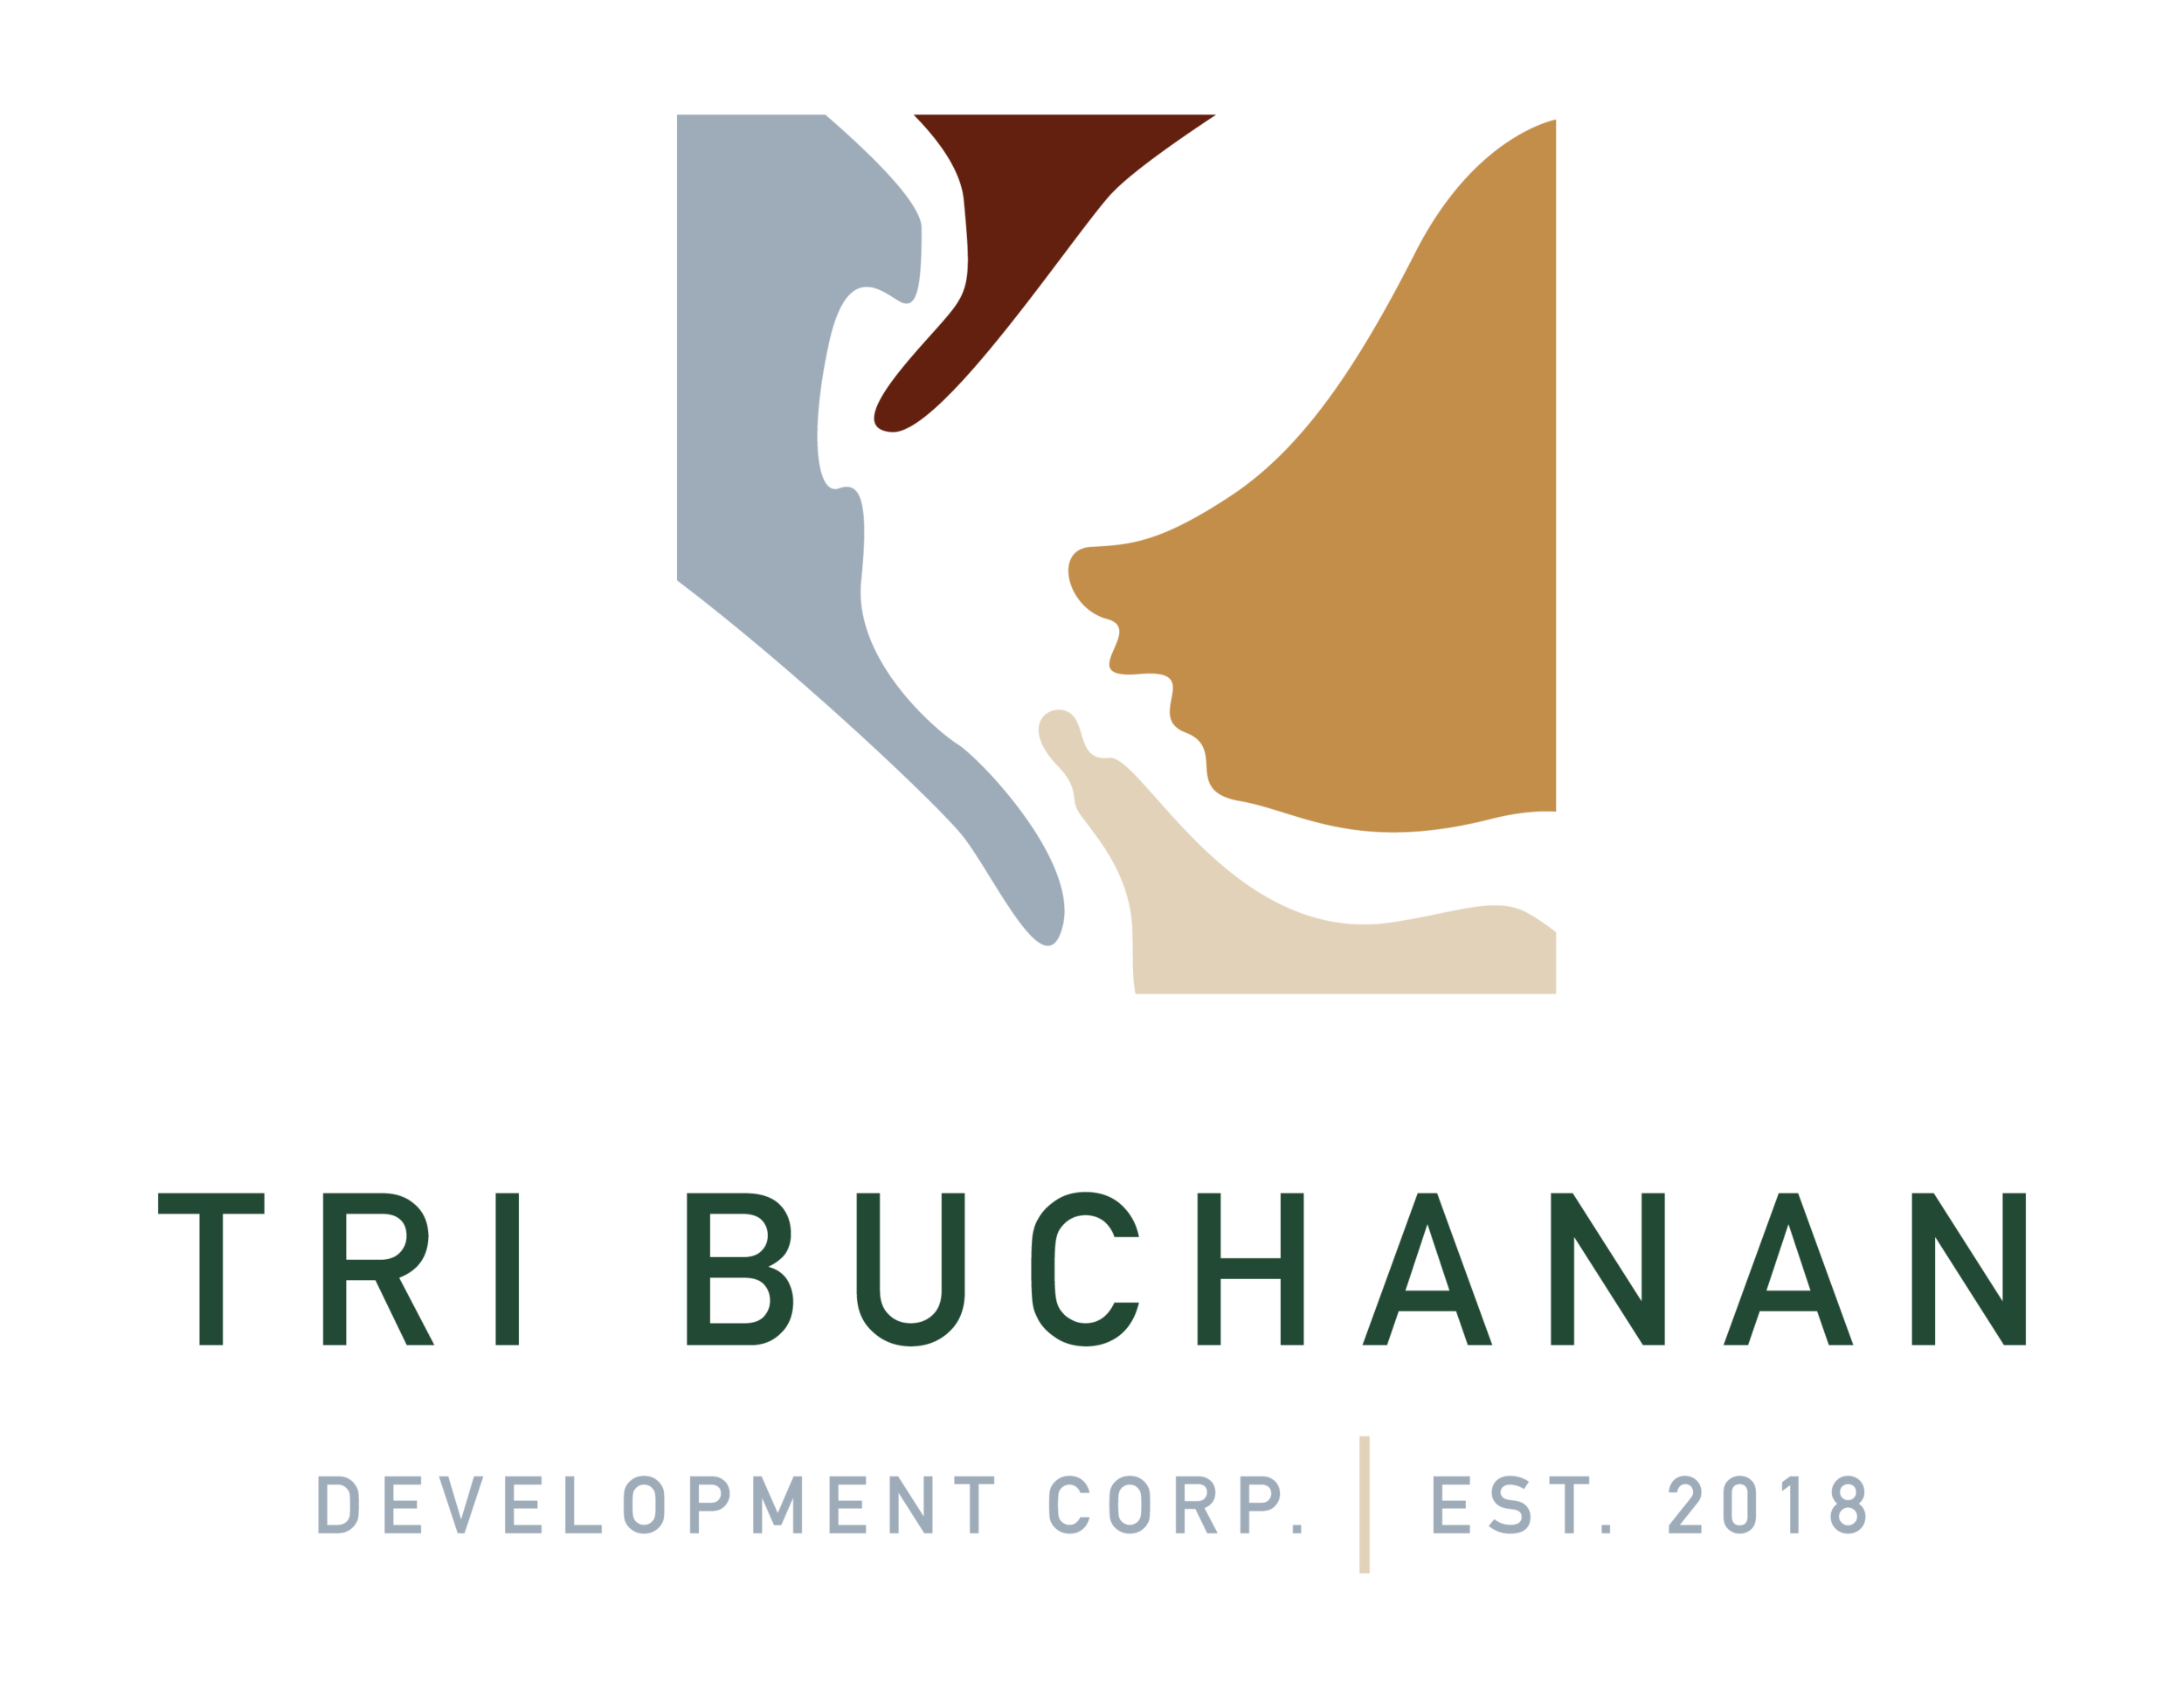 Tri Buchanan Development Corporation